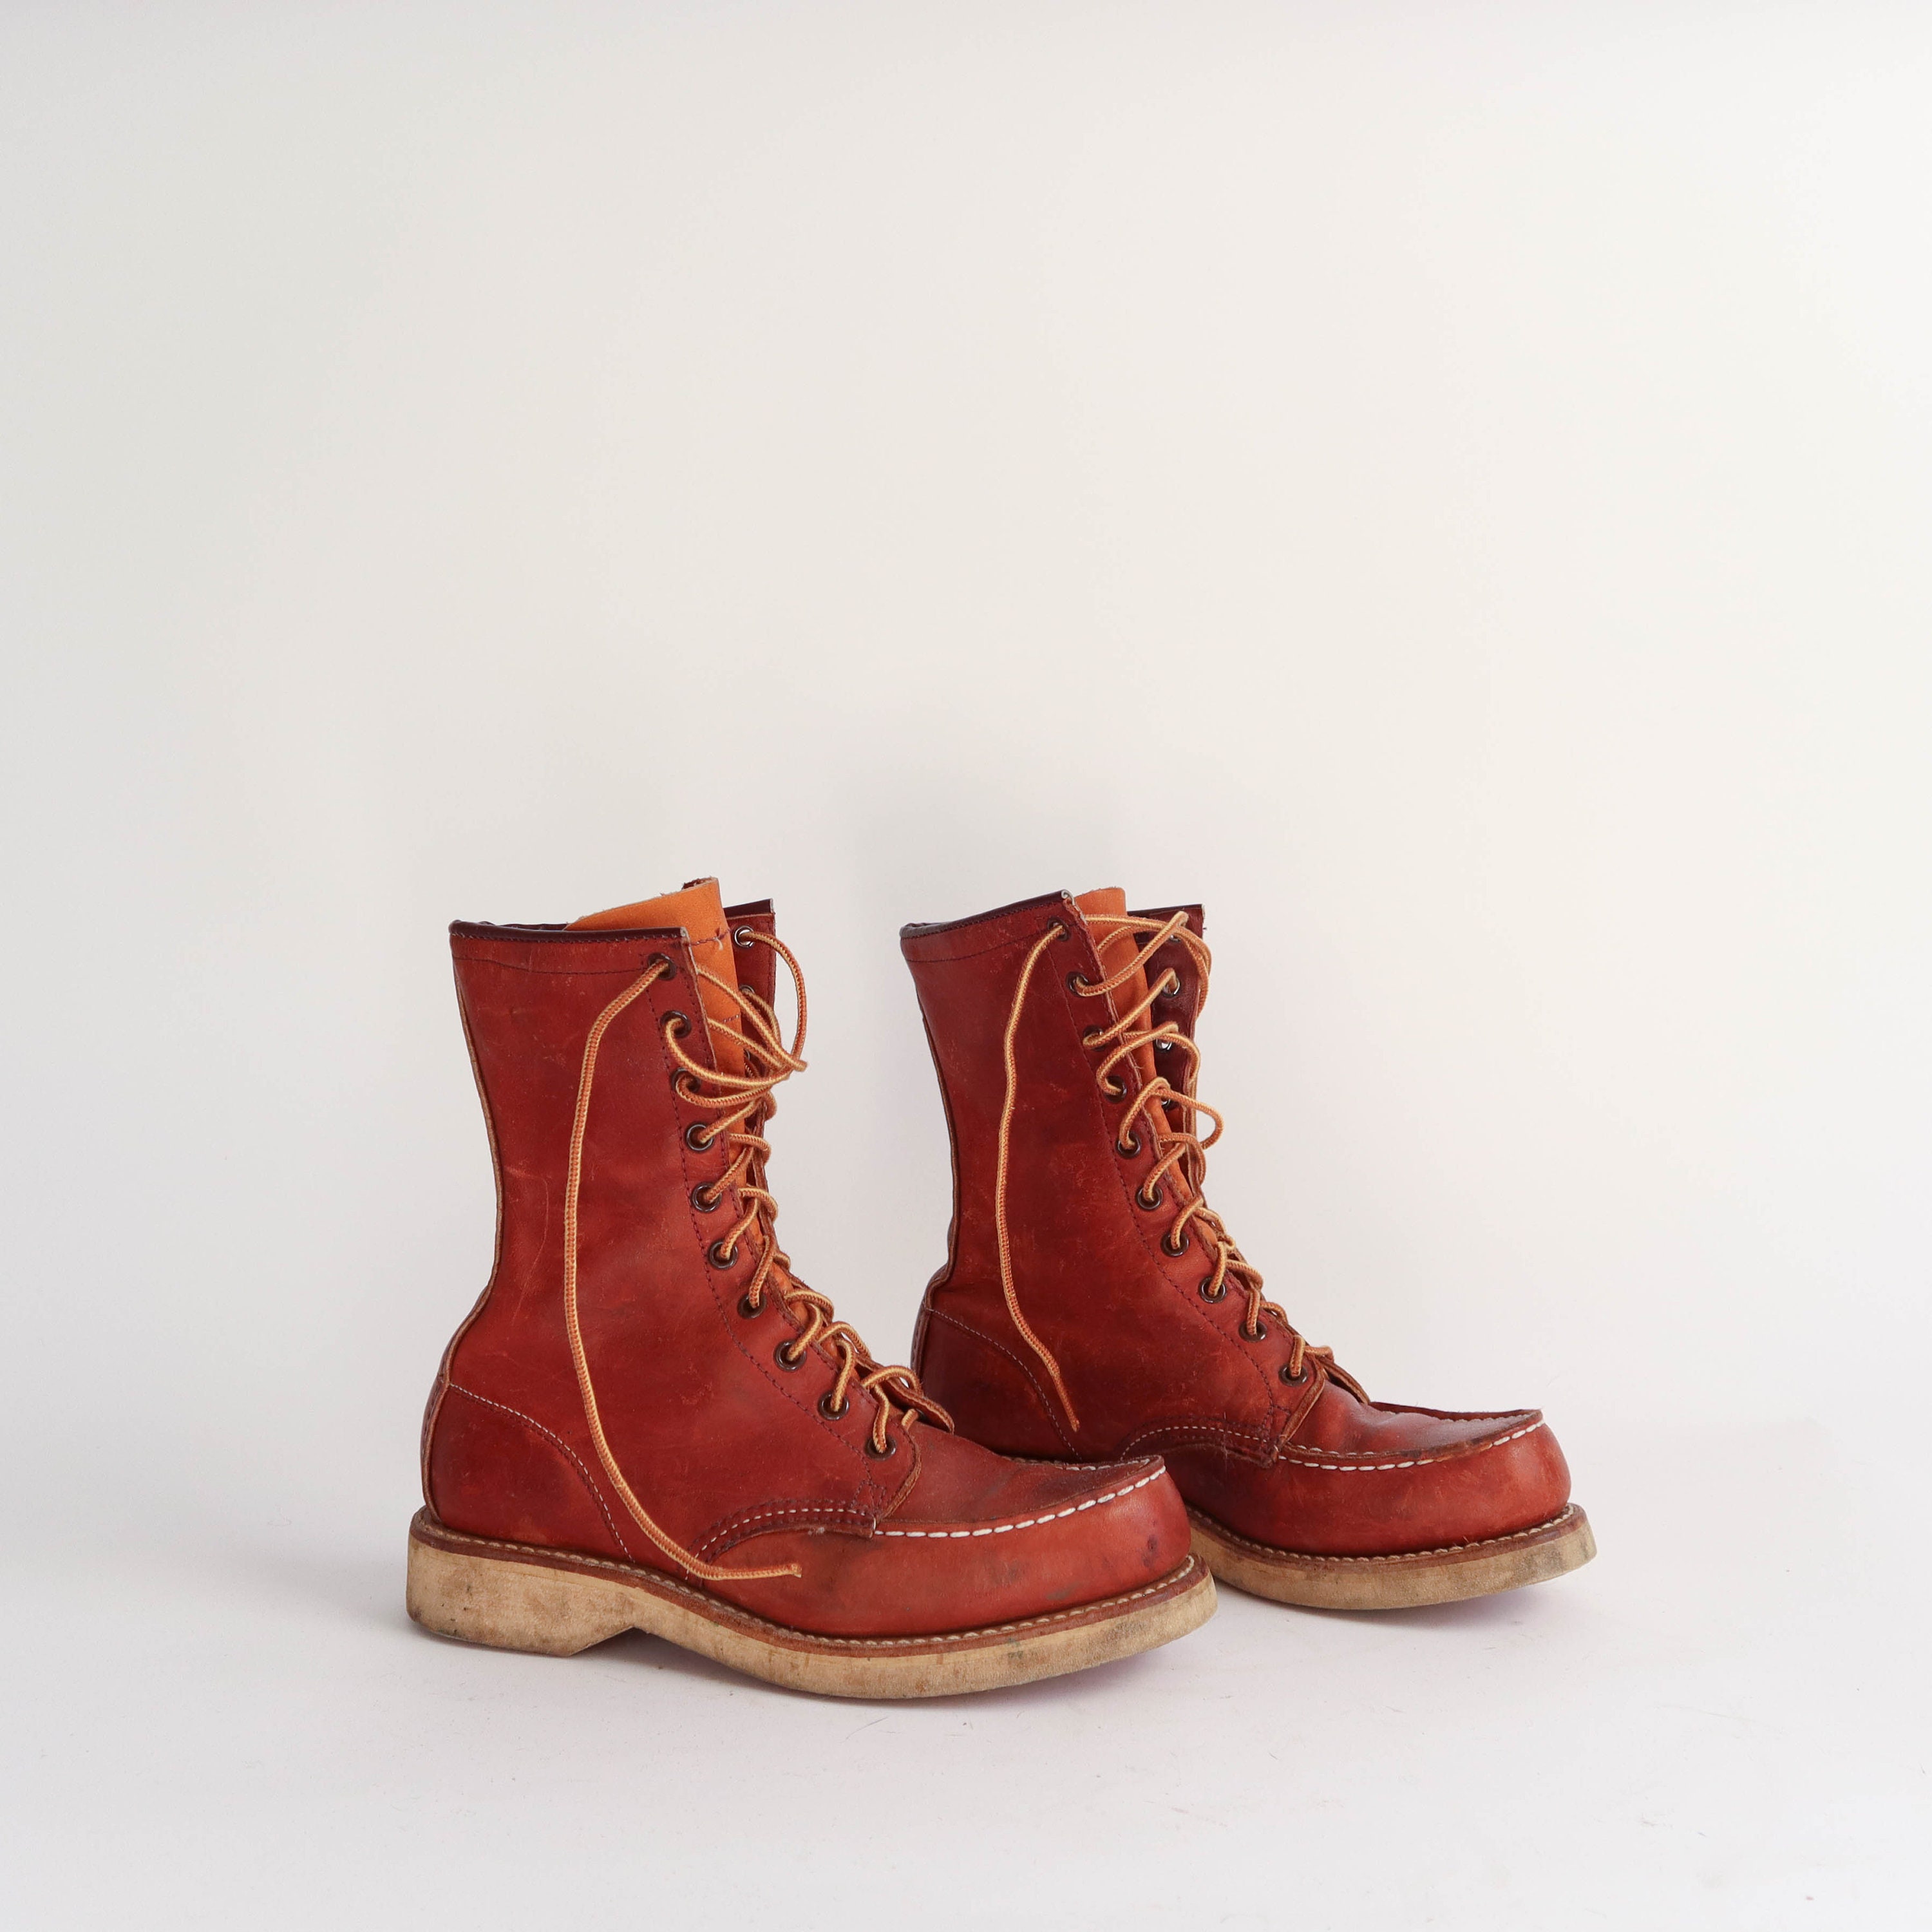 hudson bay boots on sale